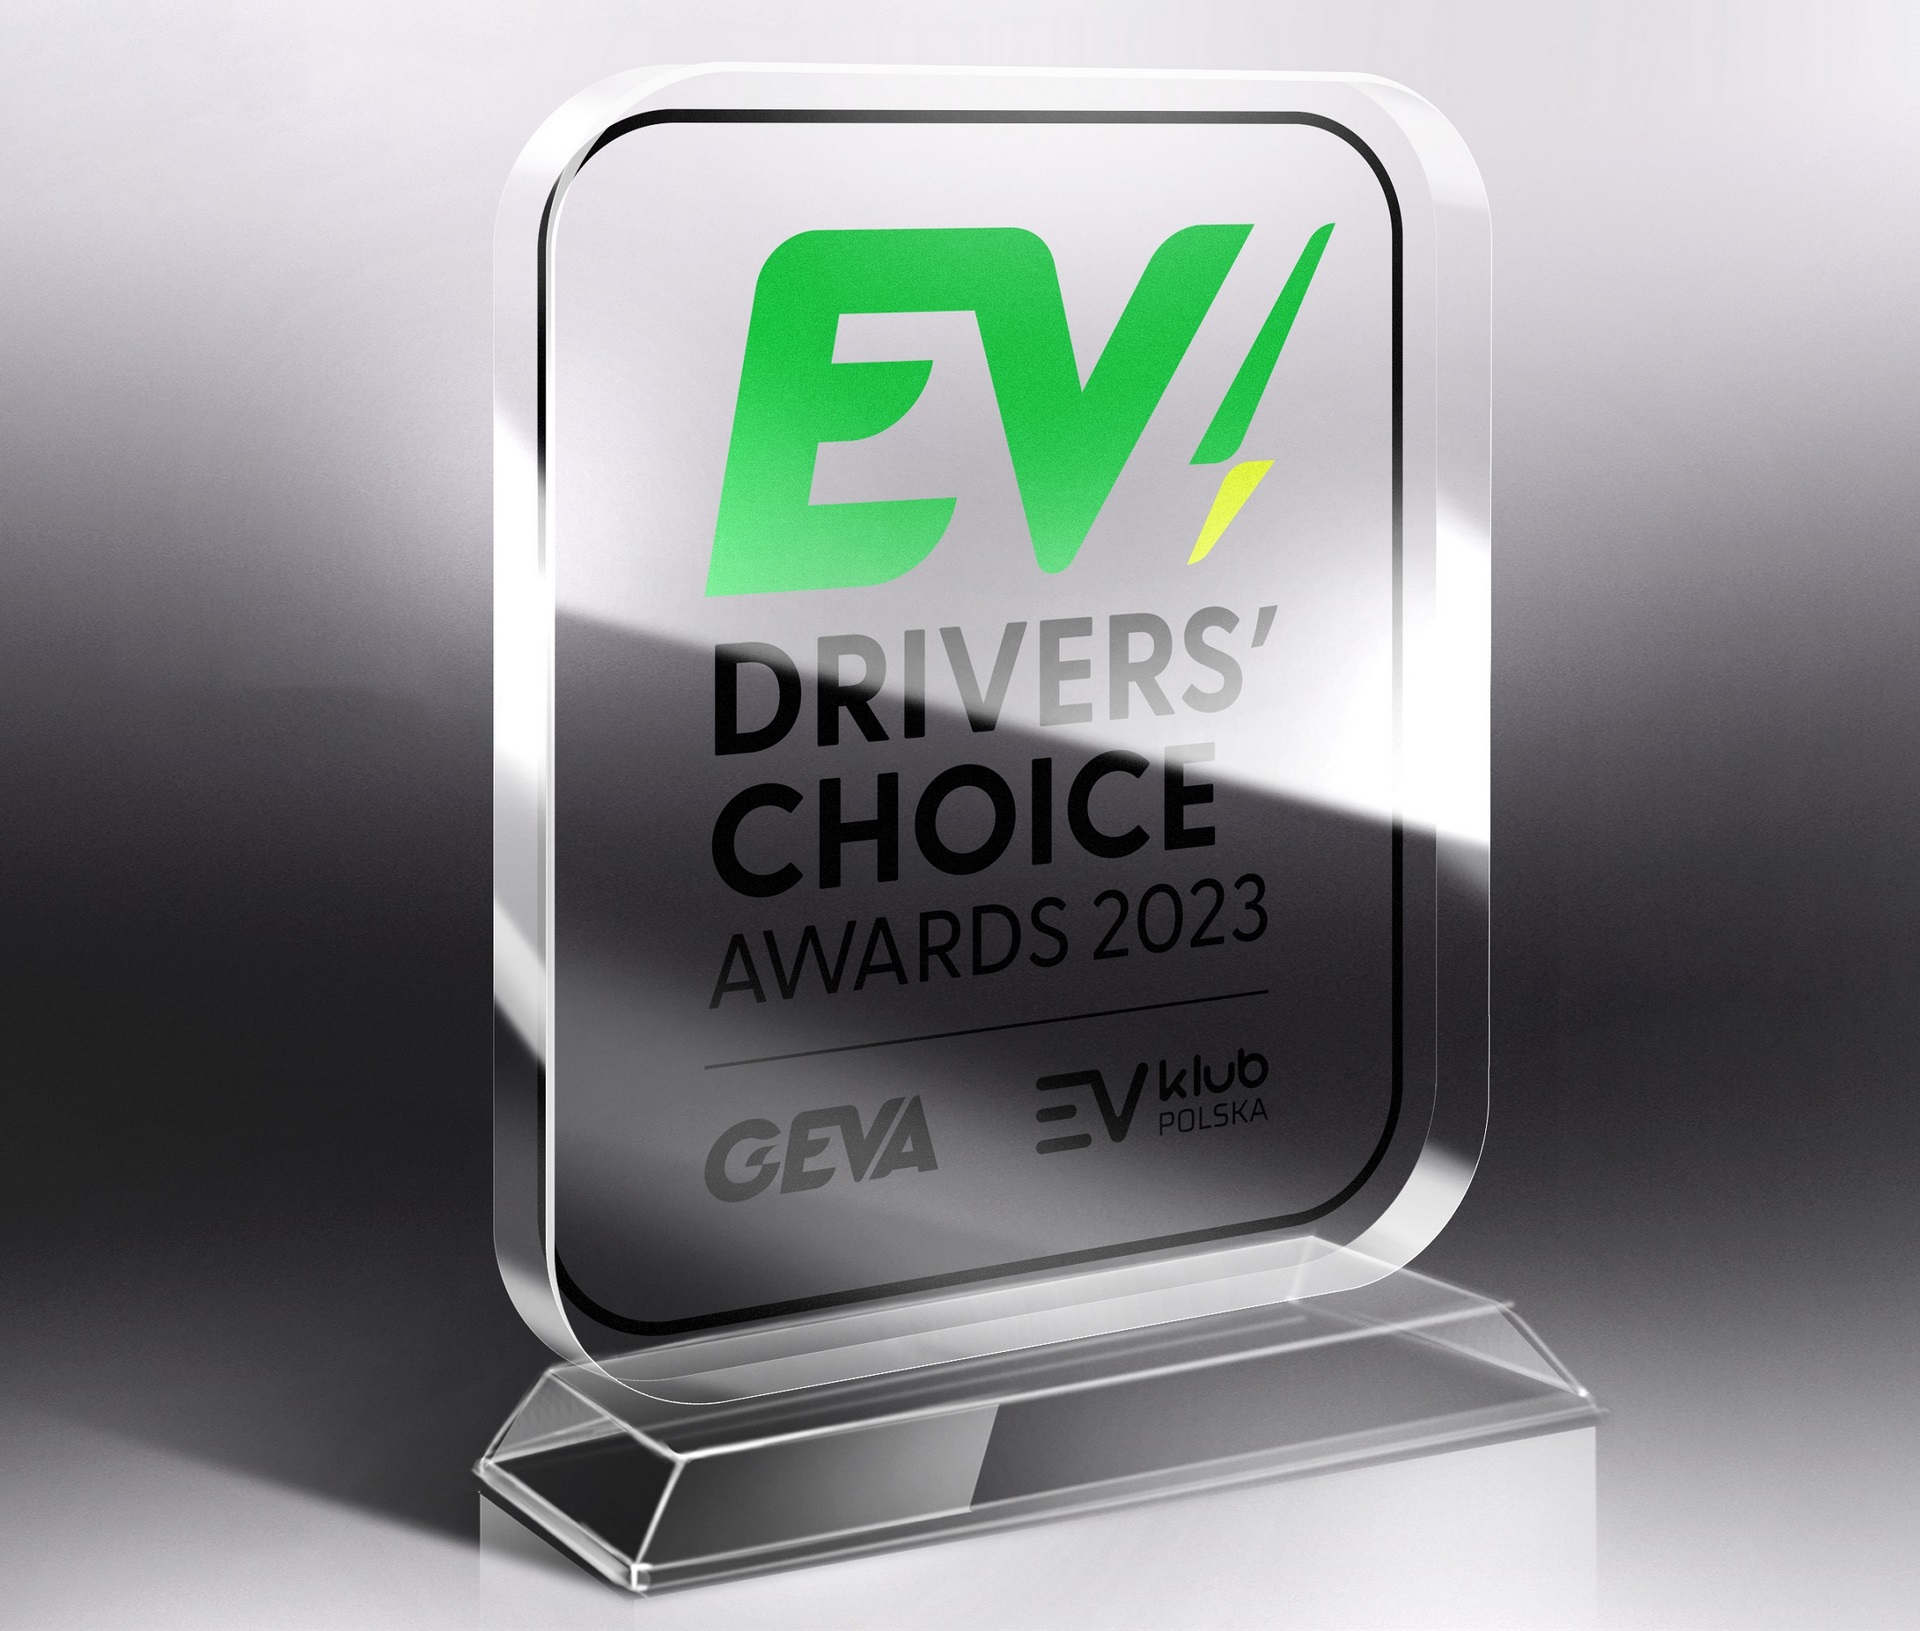 Škoda Enyaq nagrodzona w konkursie EV Drivers’ Choice